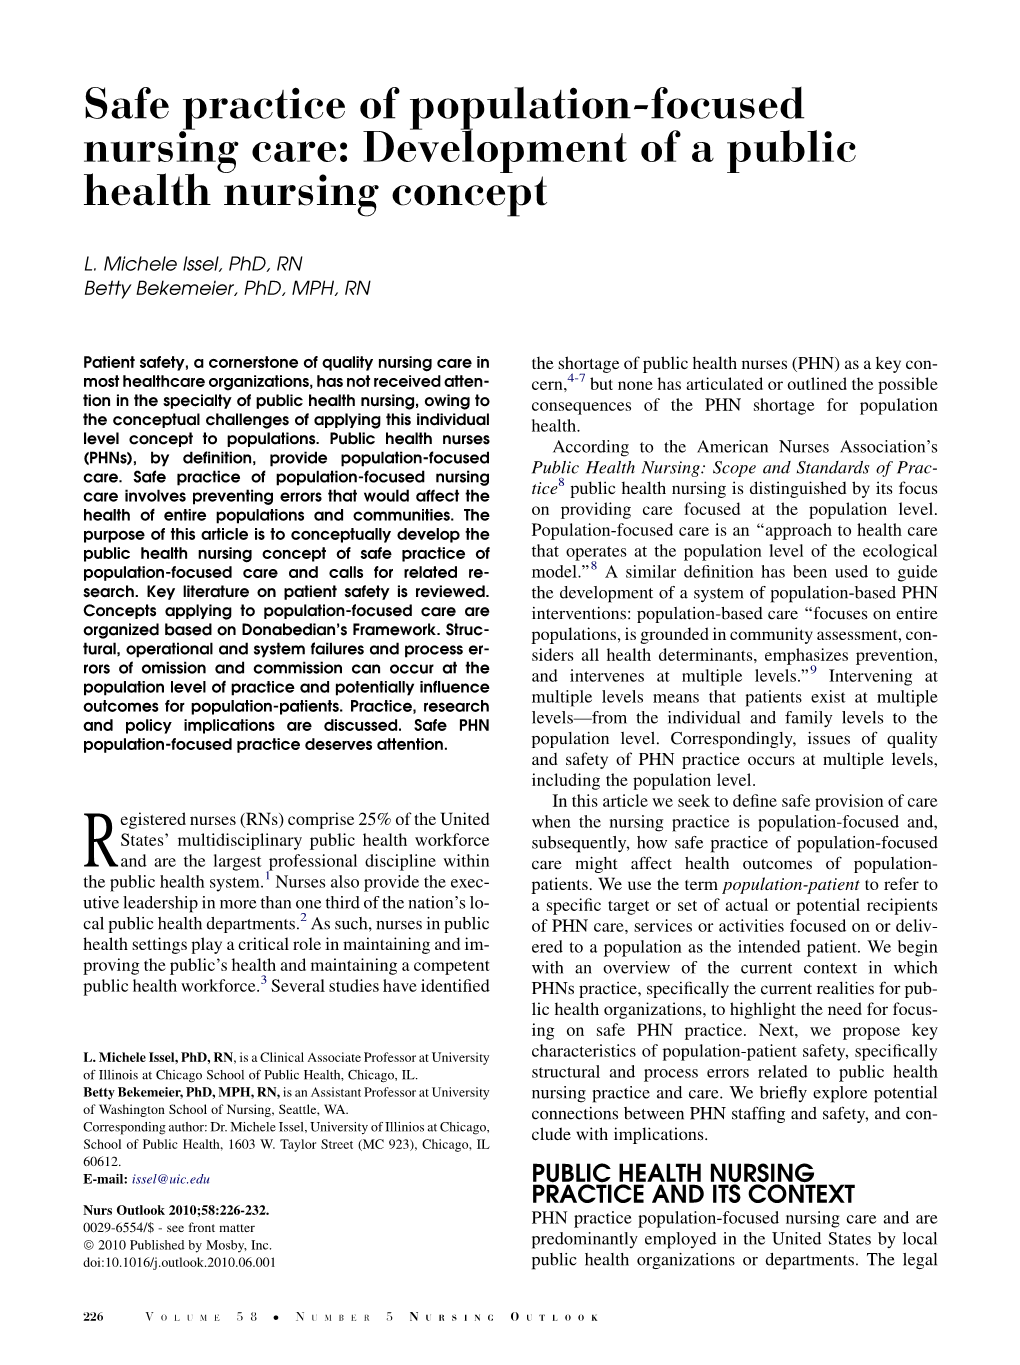 Safe Practice of Population-Focused Nursing Care: Development of a Public Health Nursing Concept